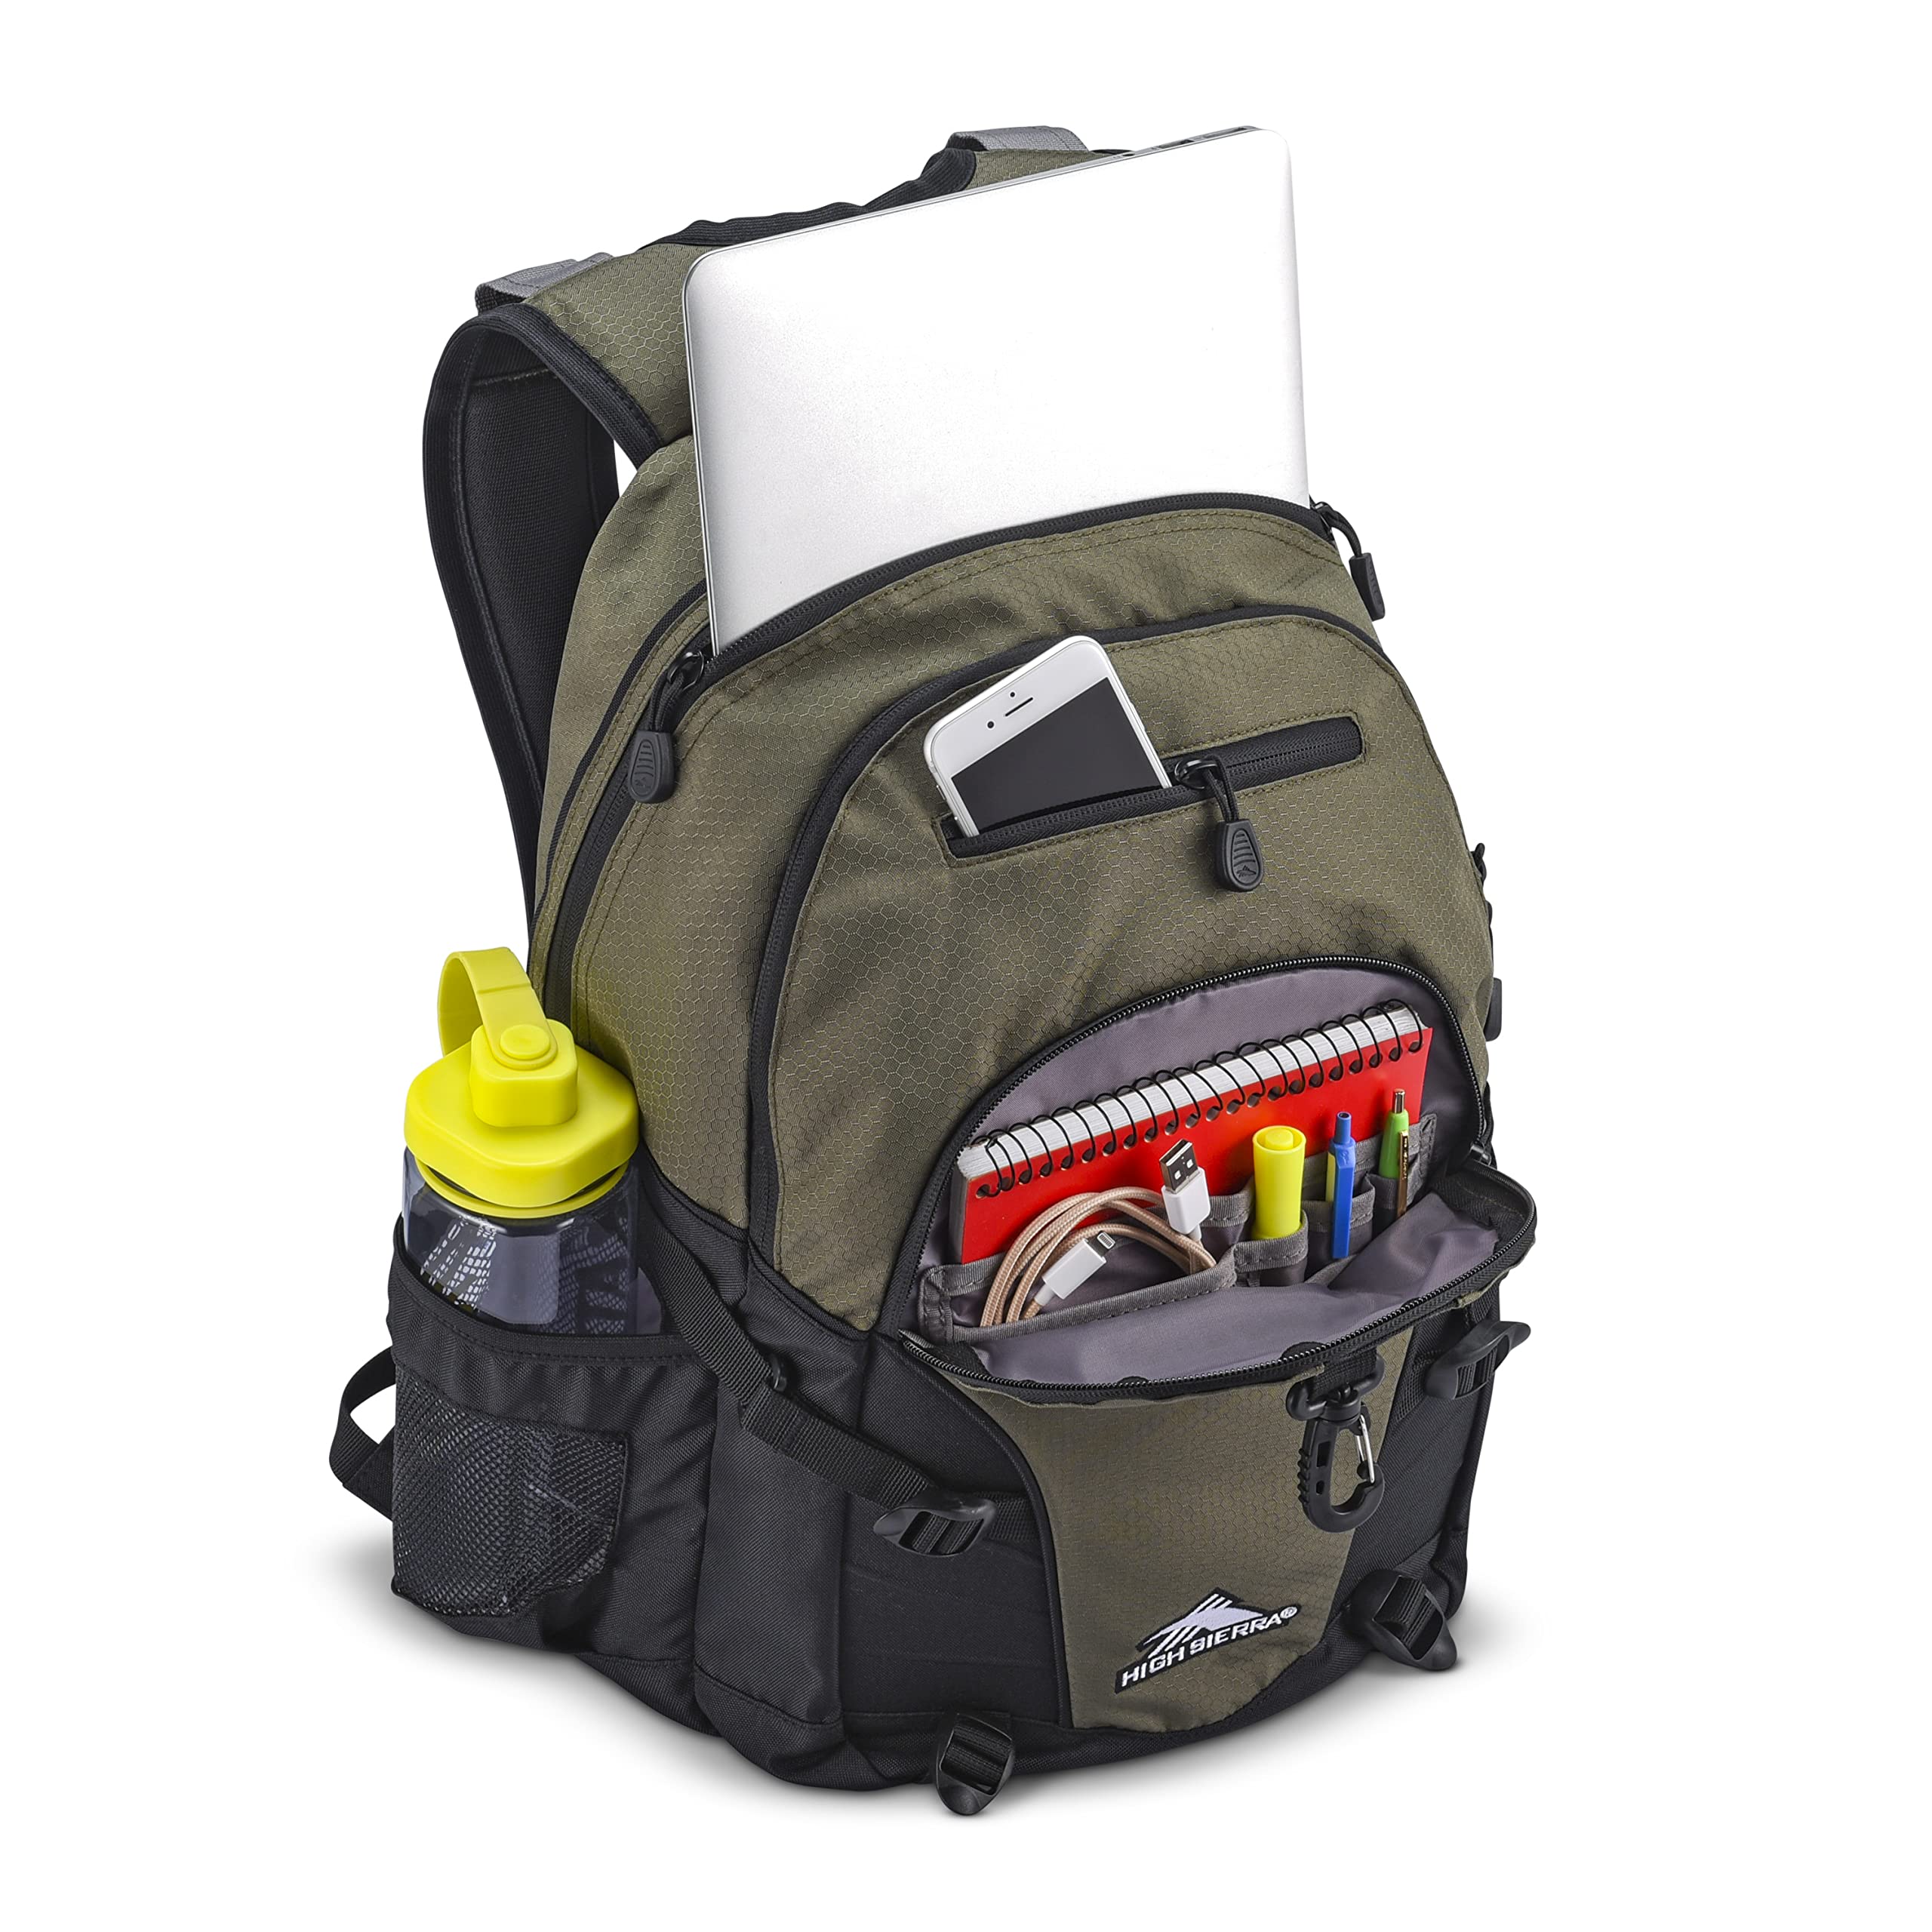 High Sierra Loop-Backpack, Travel, or Work Bookbag with tablet-sleeve, Olive, One Size